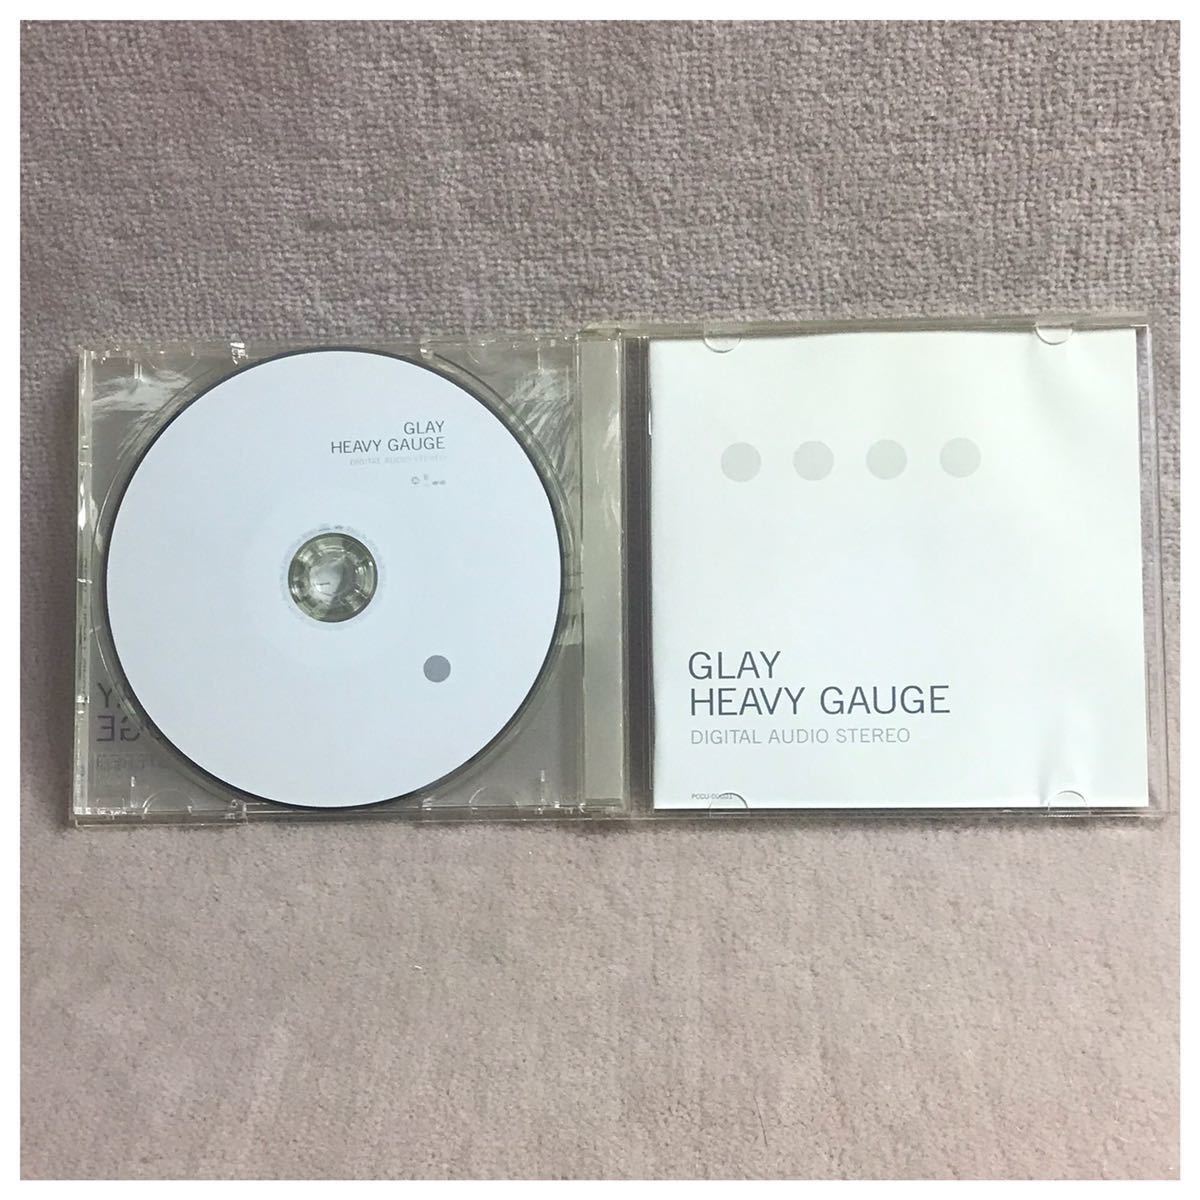 HEAVY GAUGE / GLAY